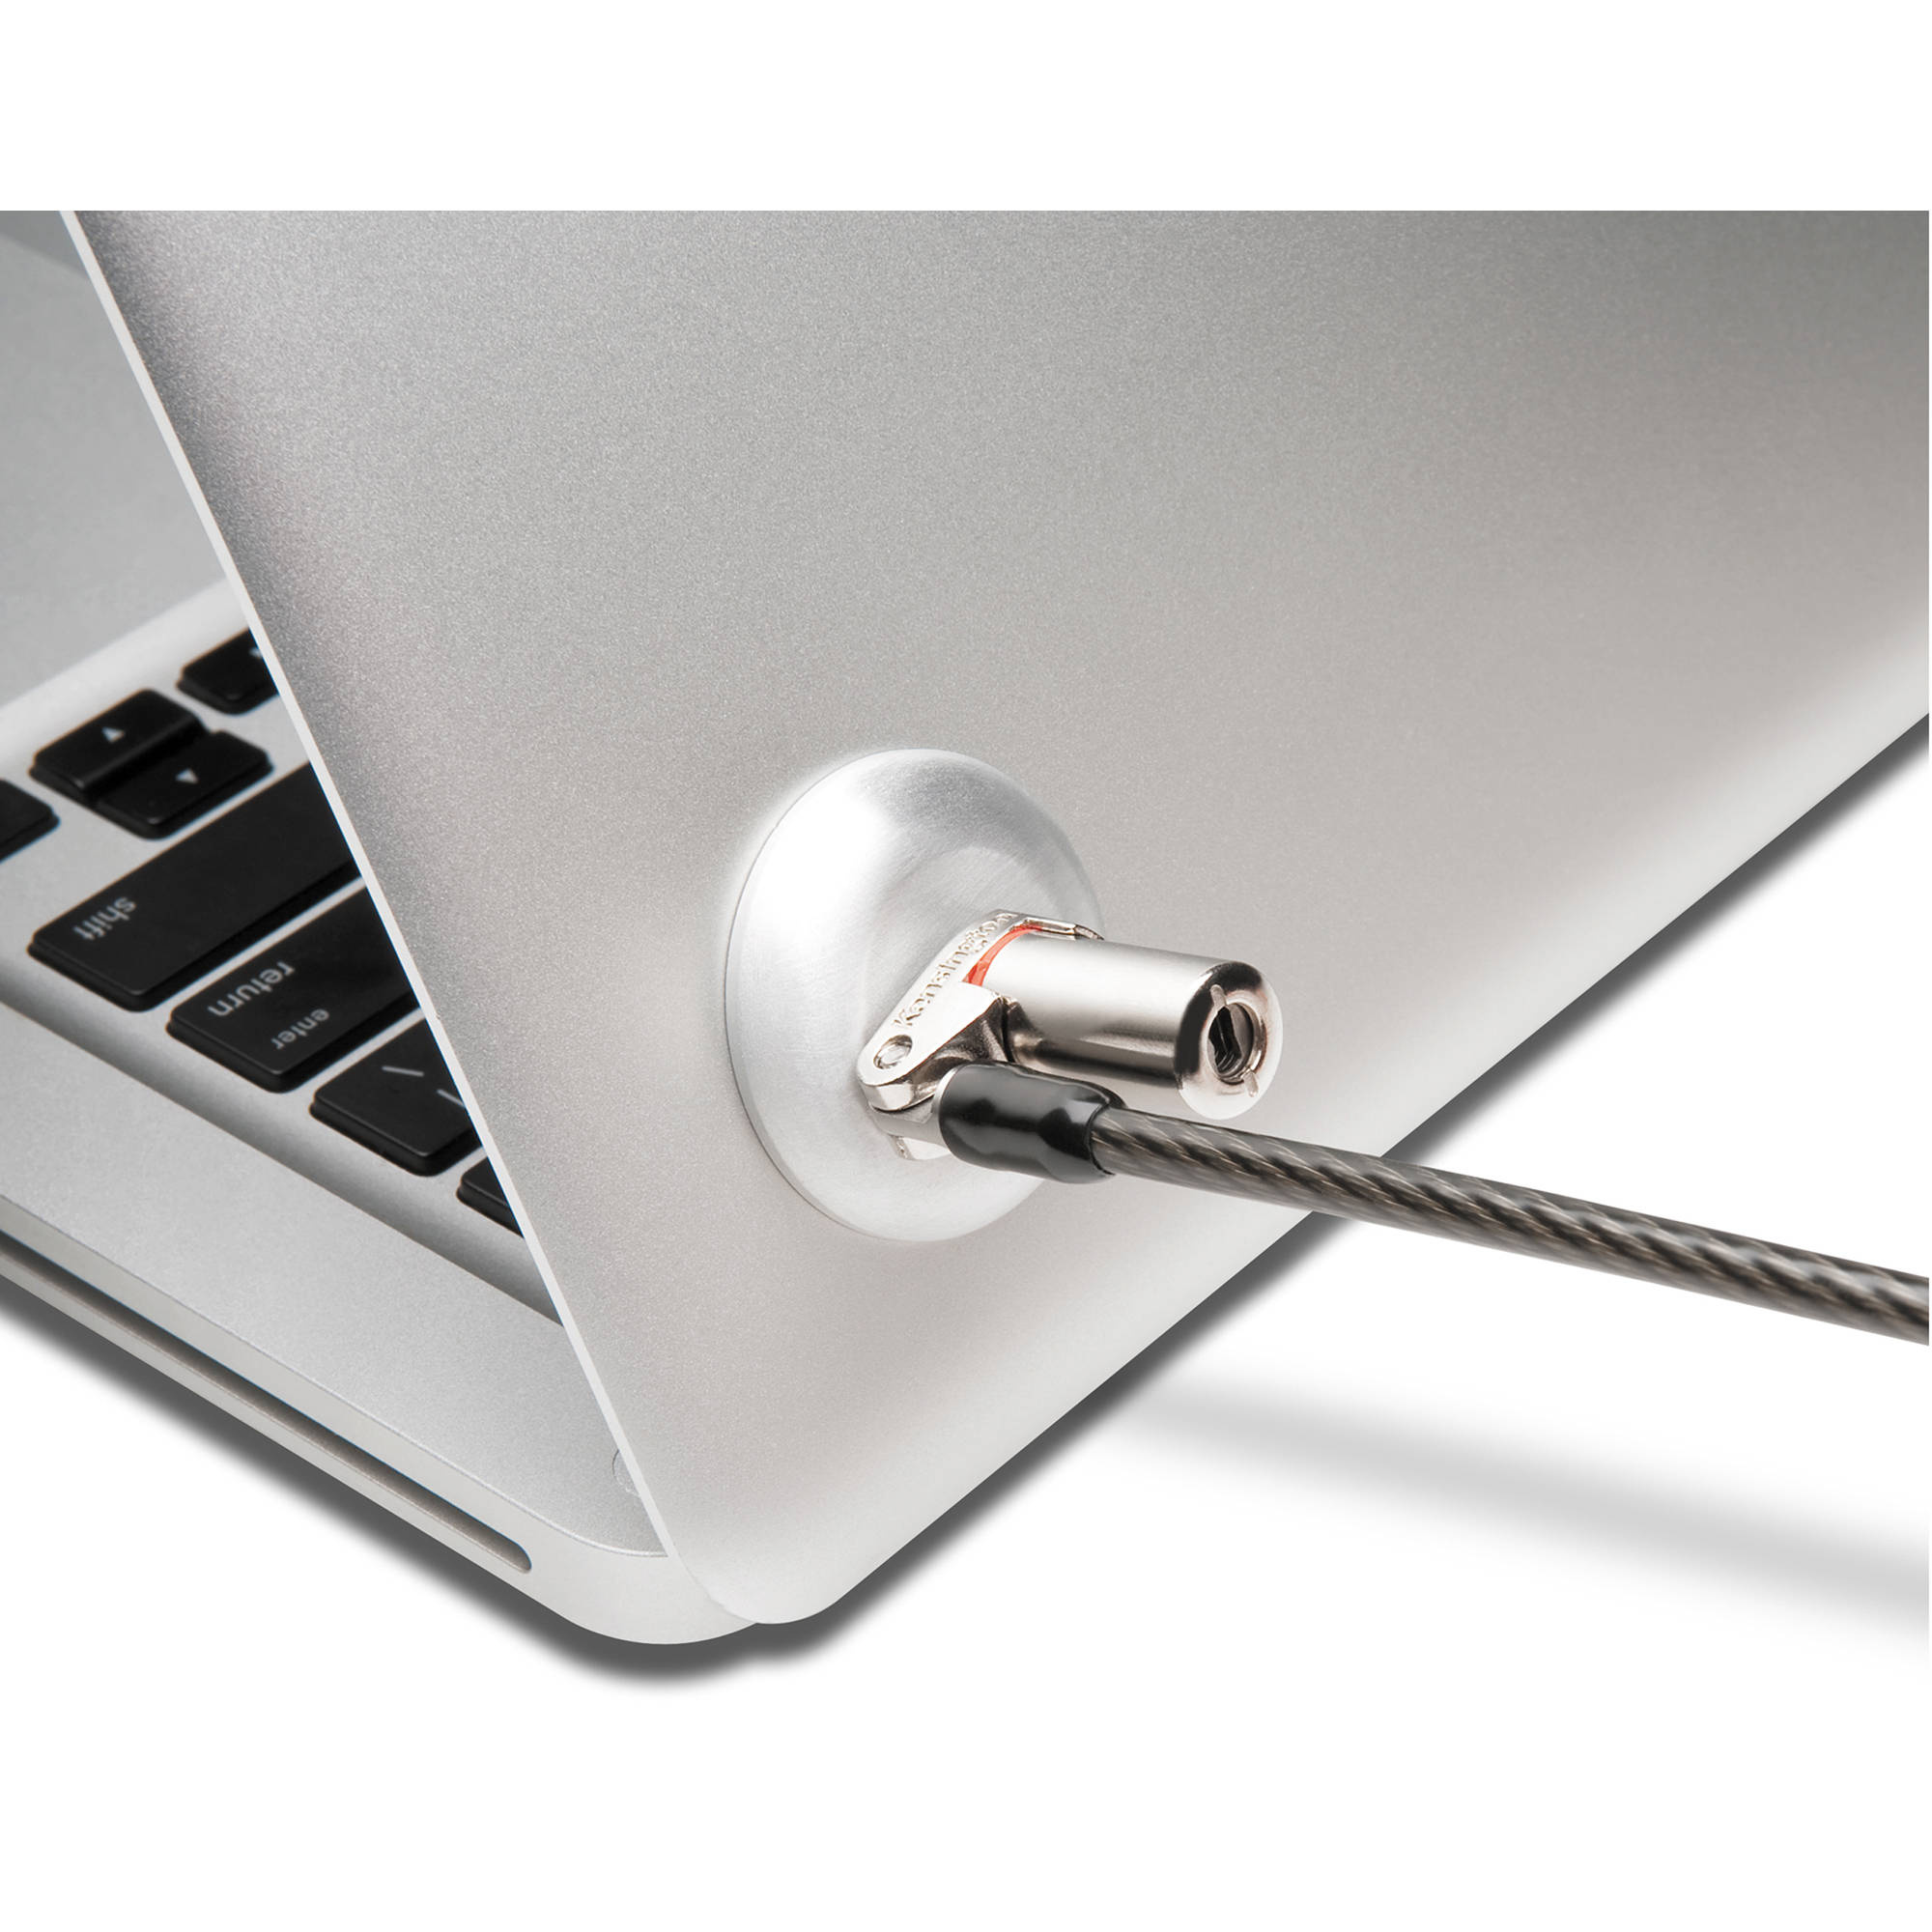 Kensington Microsaver Ultrabook Laptop Keyed Lock Nz